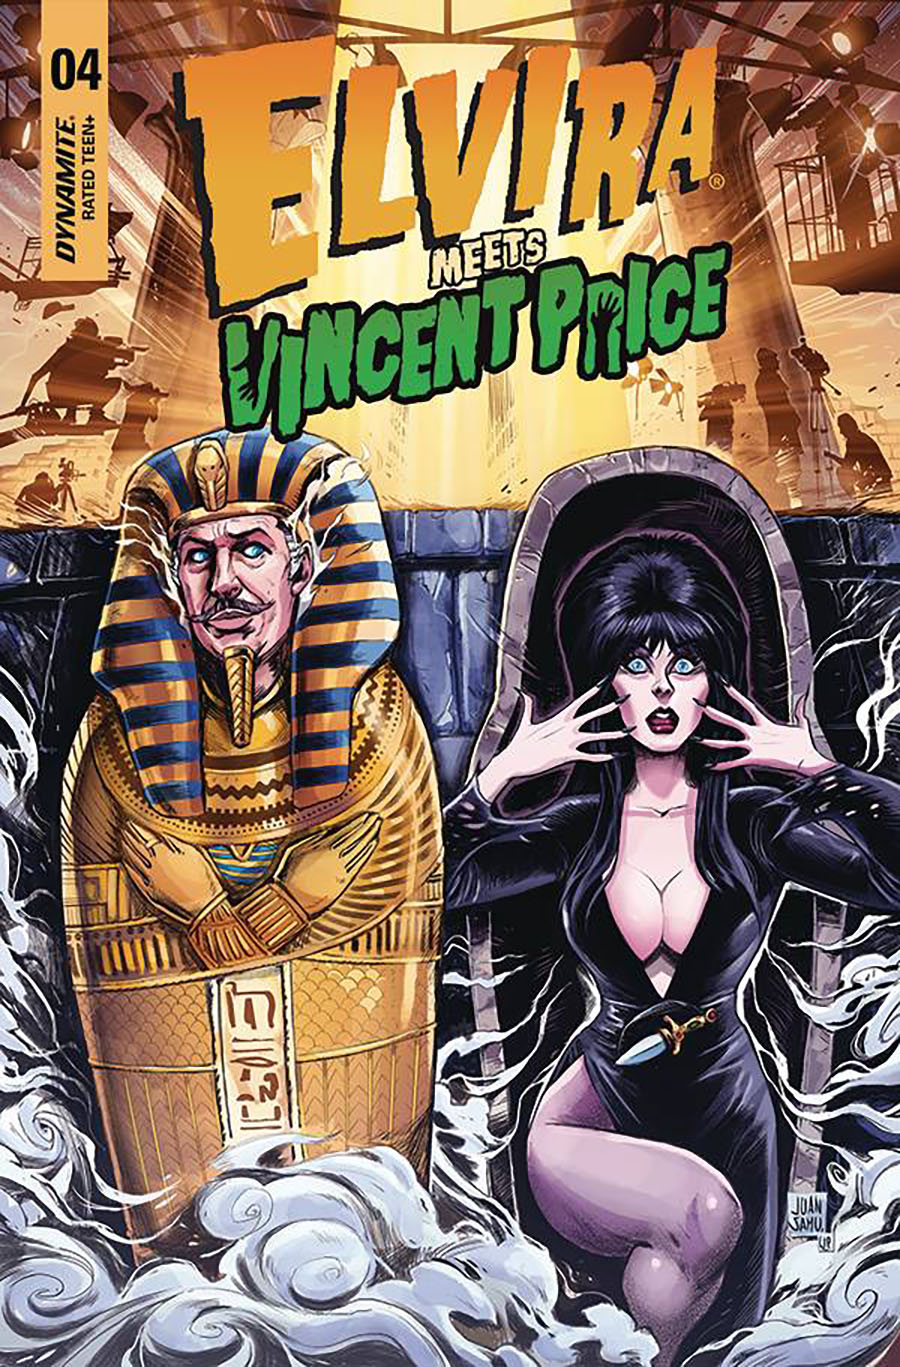 Elvira Meets Vincent Price #4 Cover B Variant Juan Samu Cover